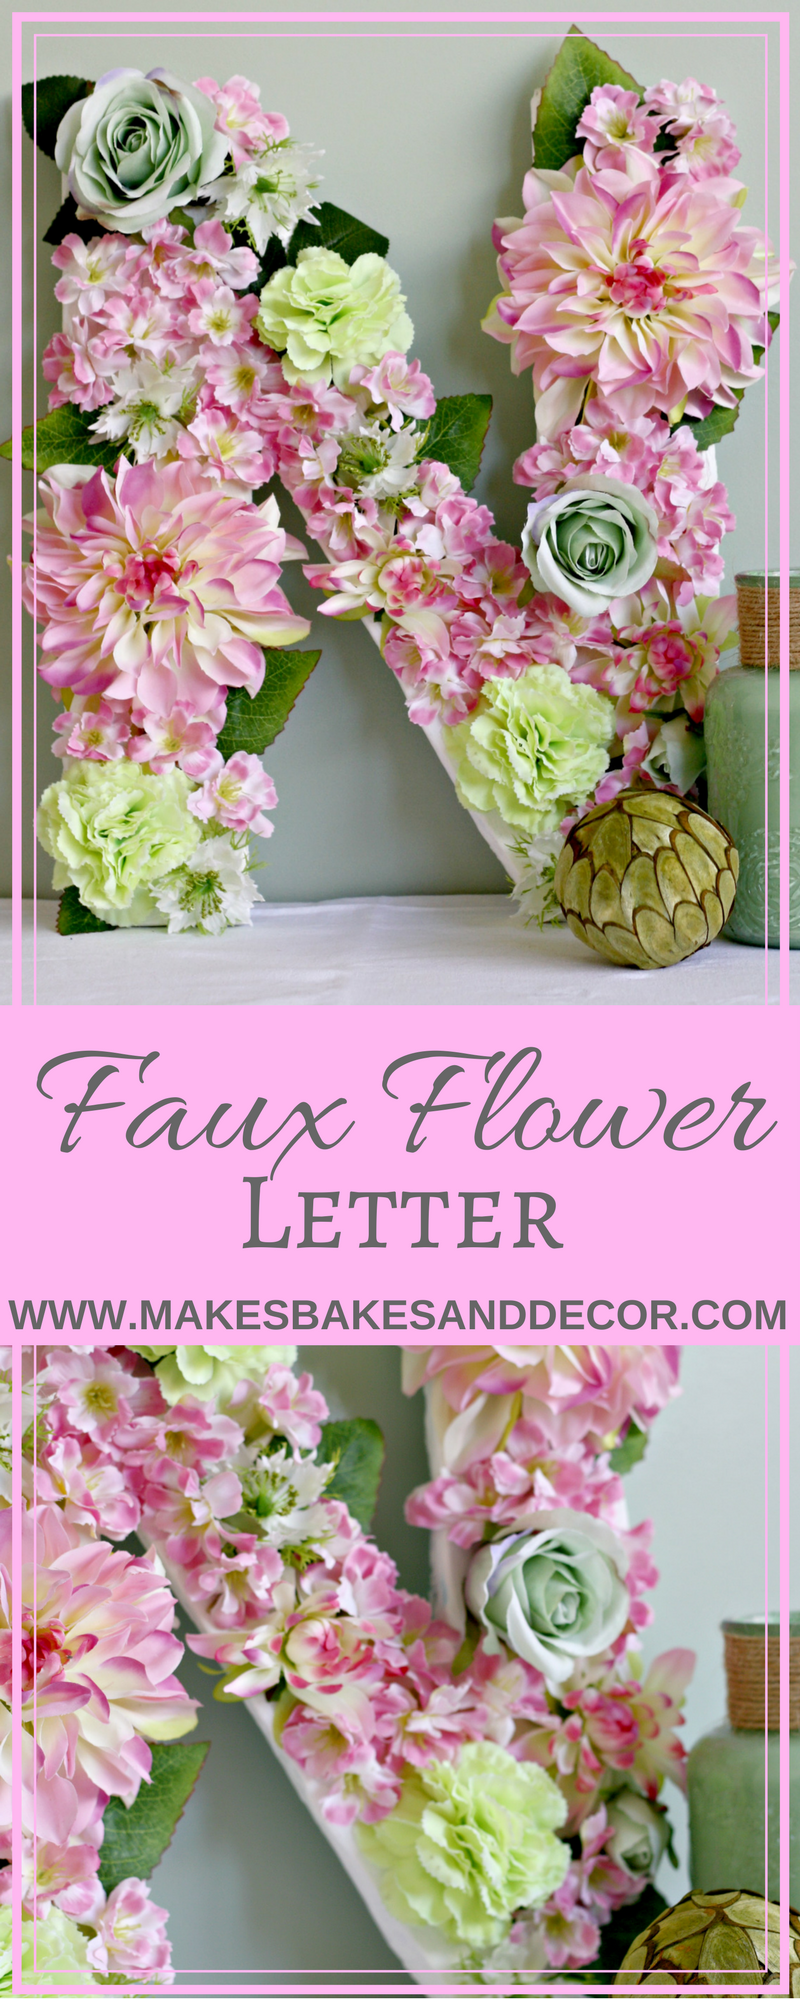 faux flower letter